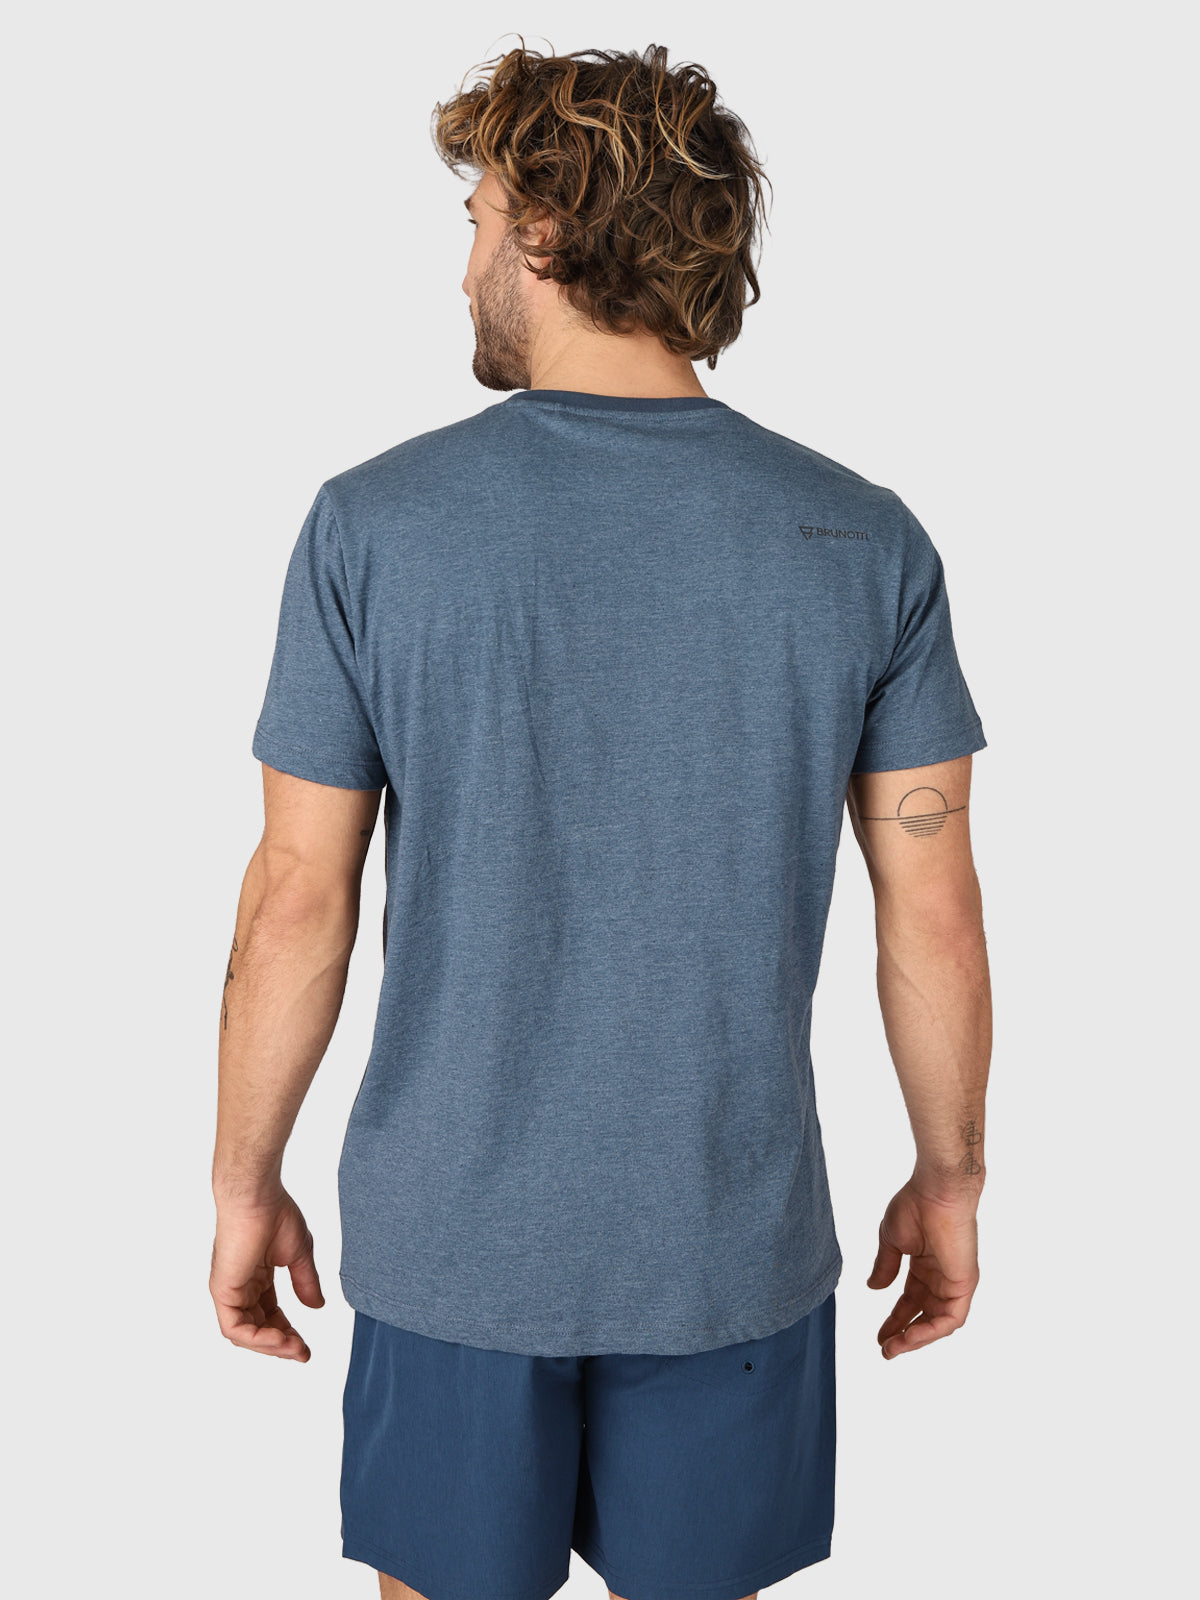 Funvibes Herren T-Shirt | Blau